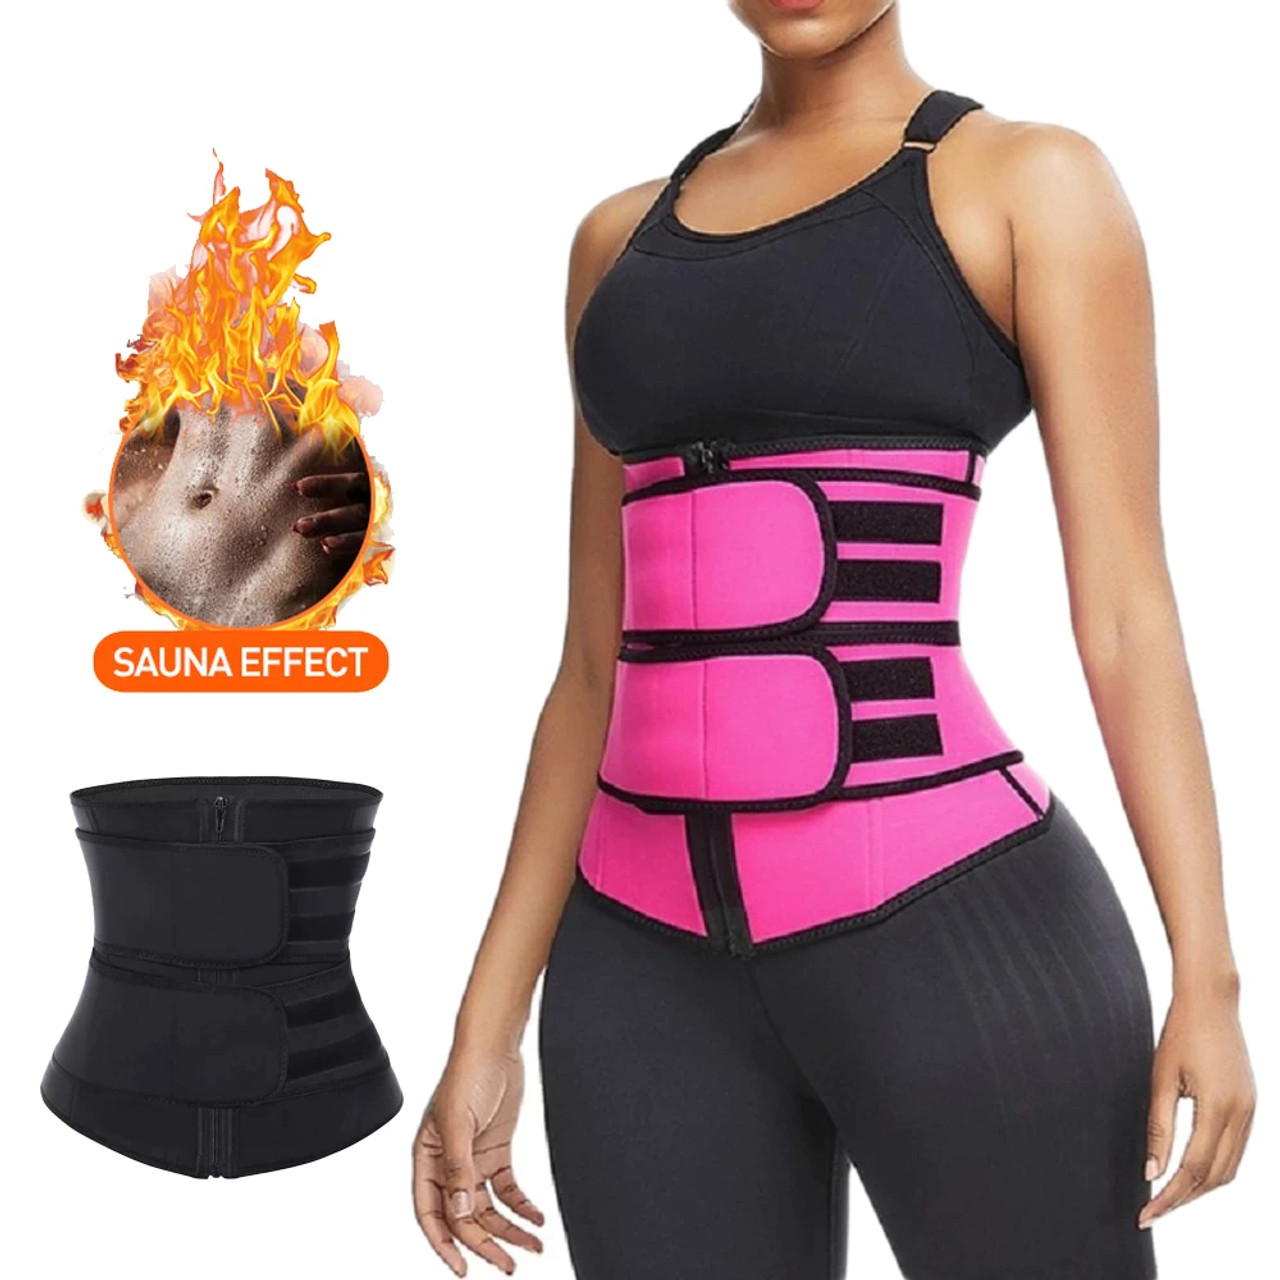 https://cdn11.bigcommerce.com/s-yvpirc28f4/images/stencil/1280x1280/products/48943/216906/Waist-Trainer-Corset-Sweat-Belt-for-Women-Weight-Loss-Shapewear-Lady-Body-Shaper-Slimming-Fat-Burning.jpg_Q90.jpg___92365.1654151629.jpg?c=1&imbypass=on